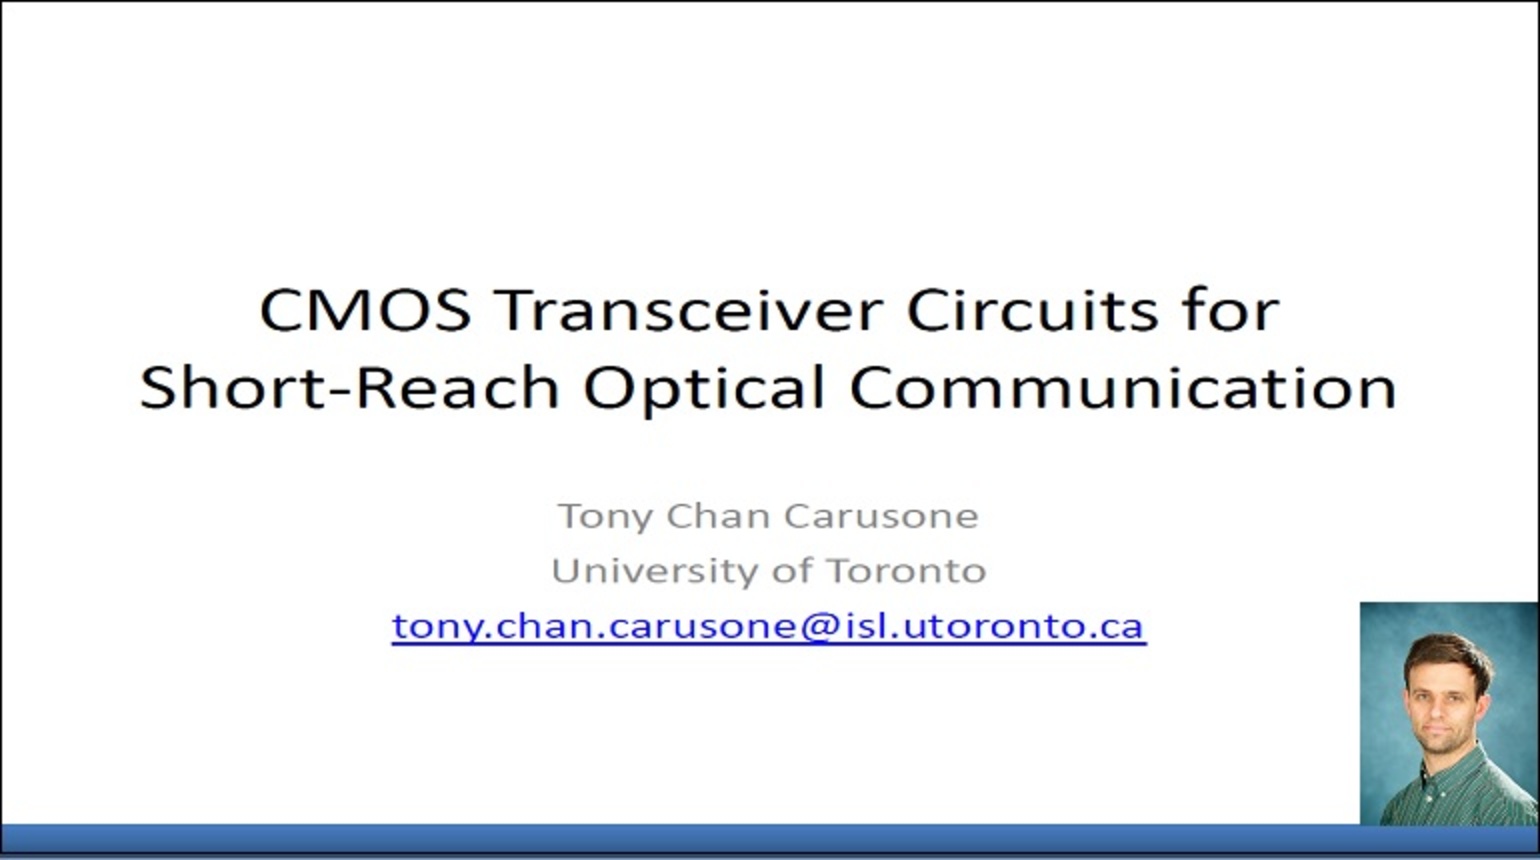 CMOS Transceiver Circuits for Short-Reach Optical Communication Video